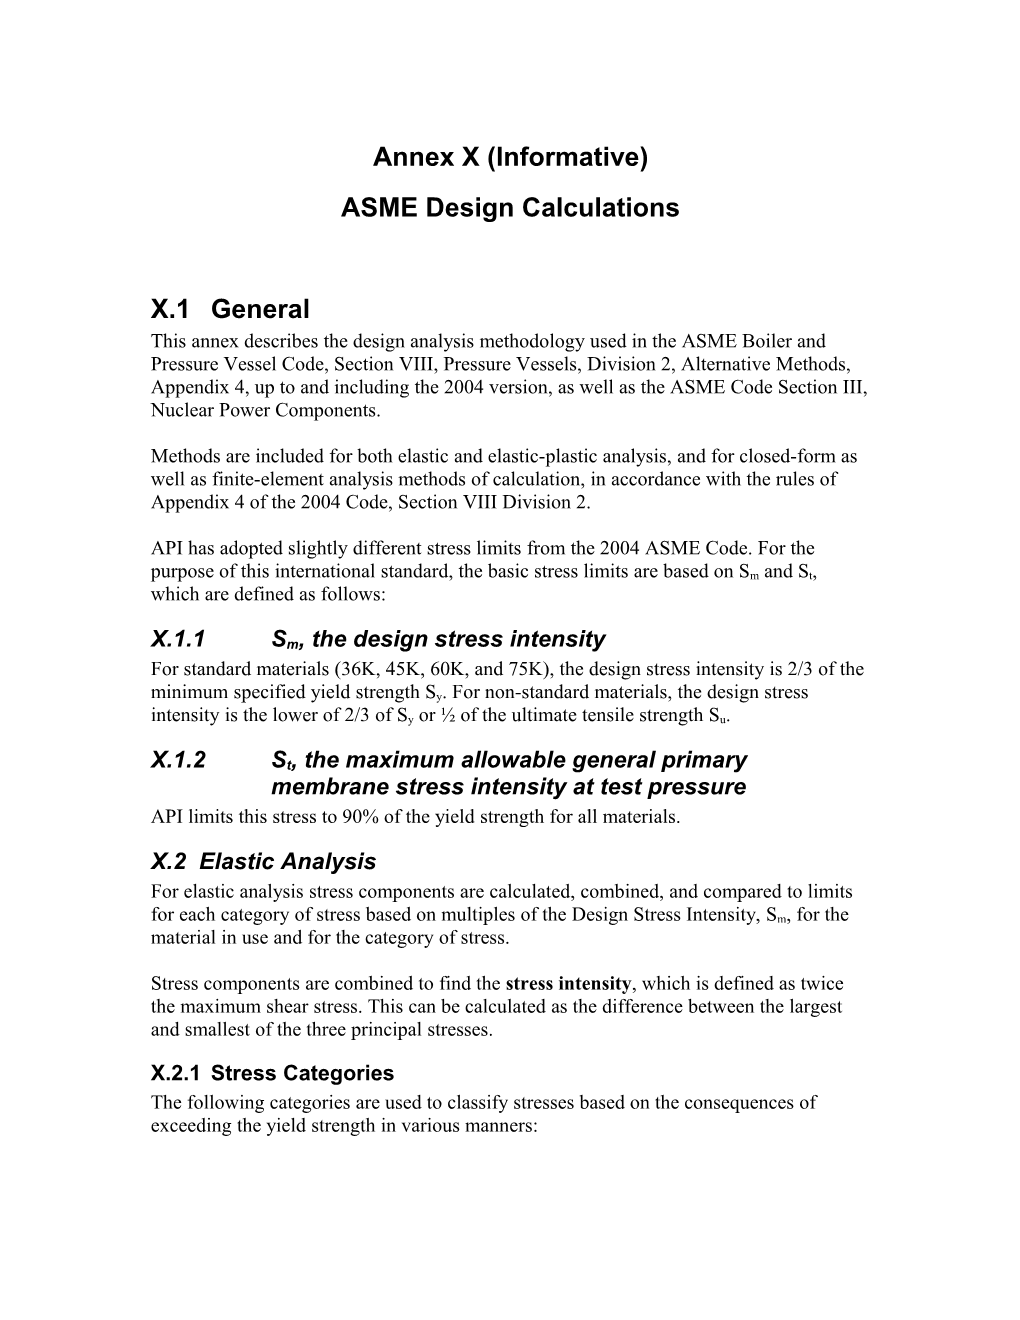 ASME Design Calculations